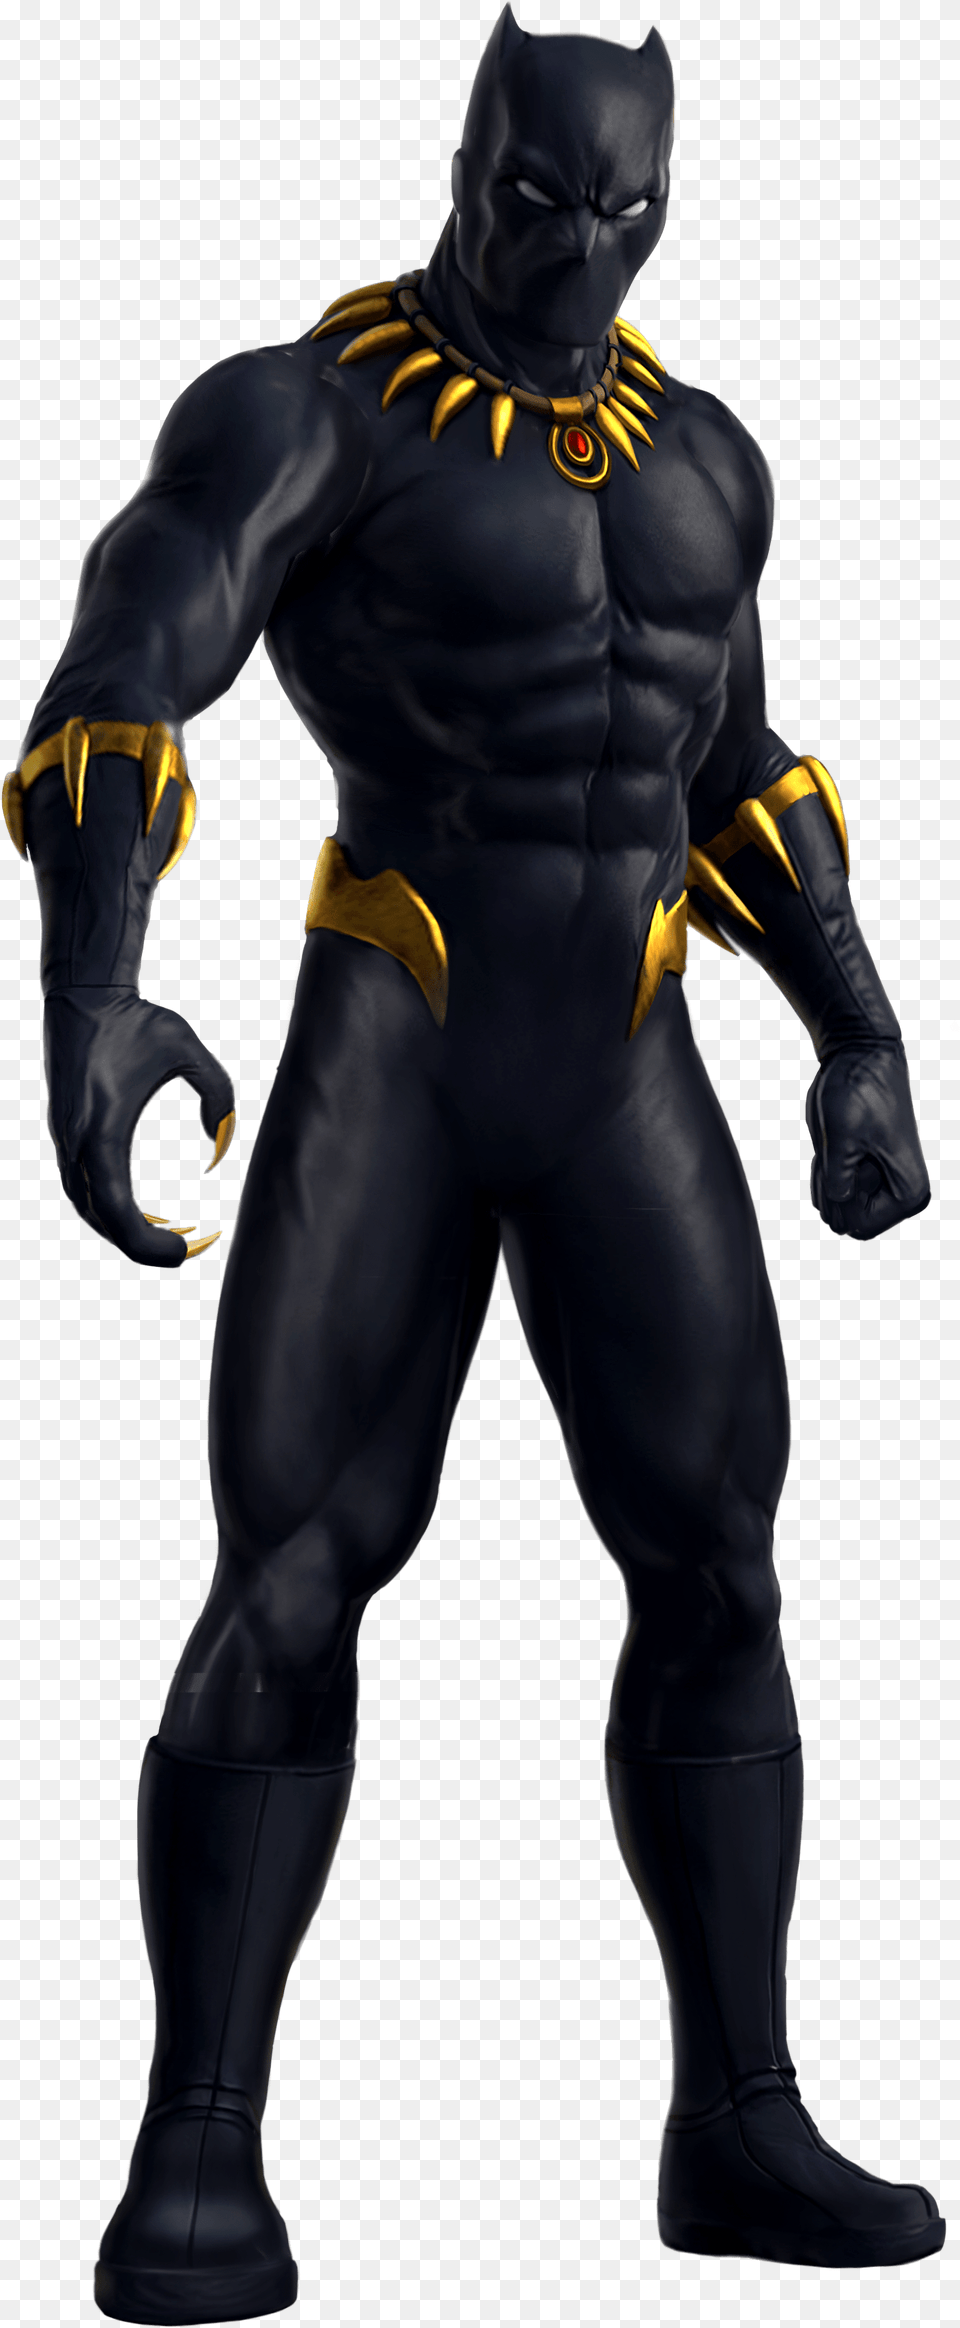 Black Panther Superhero Hulk Wakanda Fantastic Four Wakanda Superhero, Clothing, Glove, Adult, Person Png Image